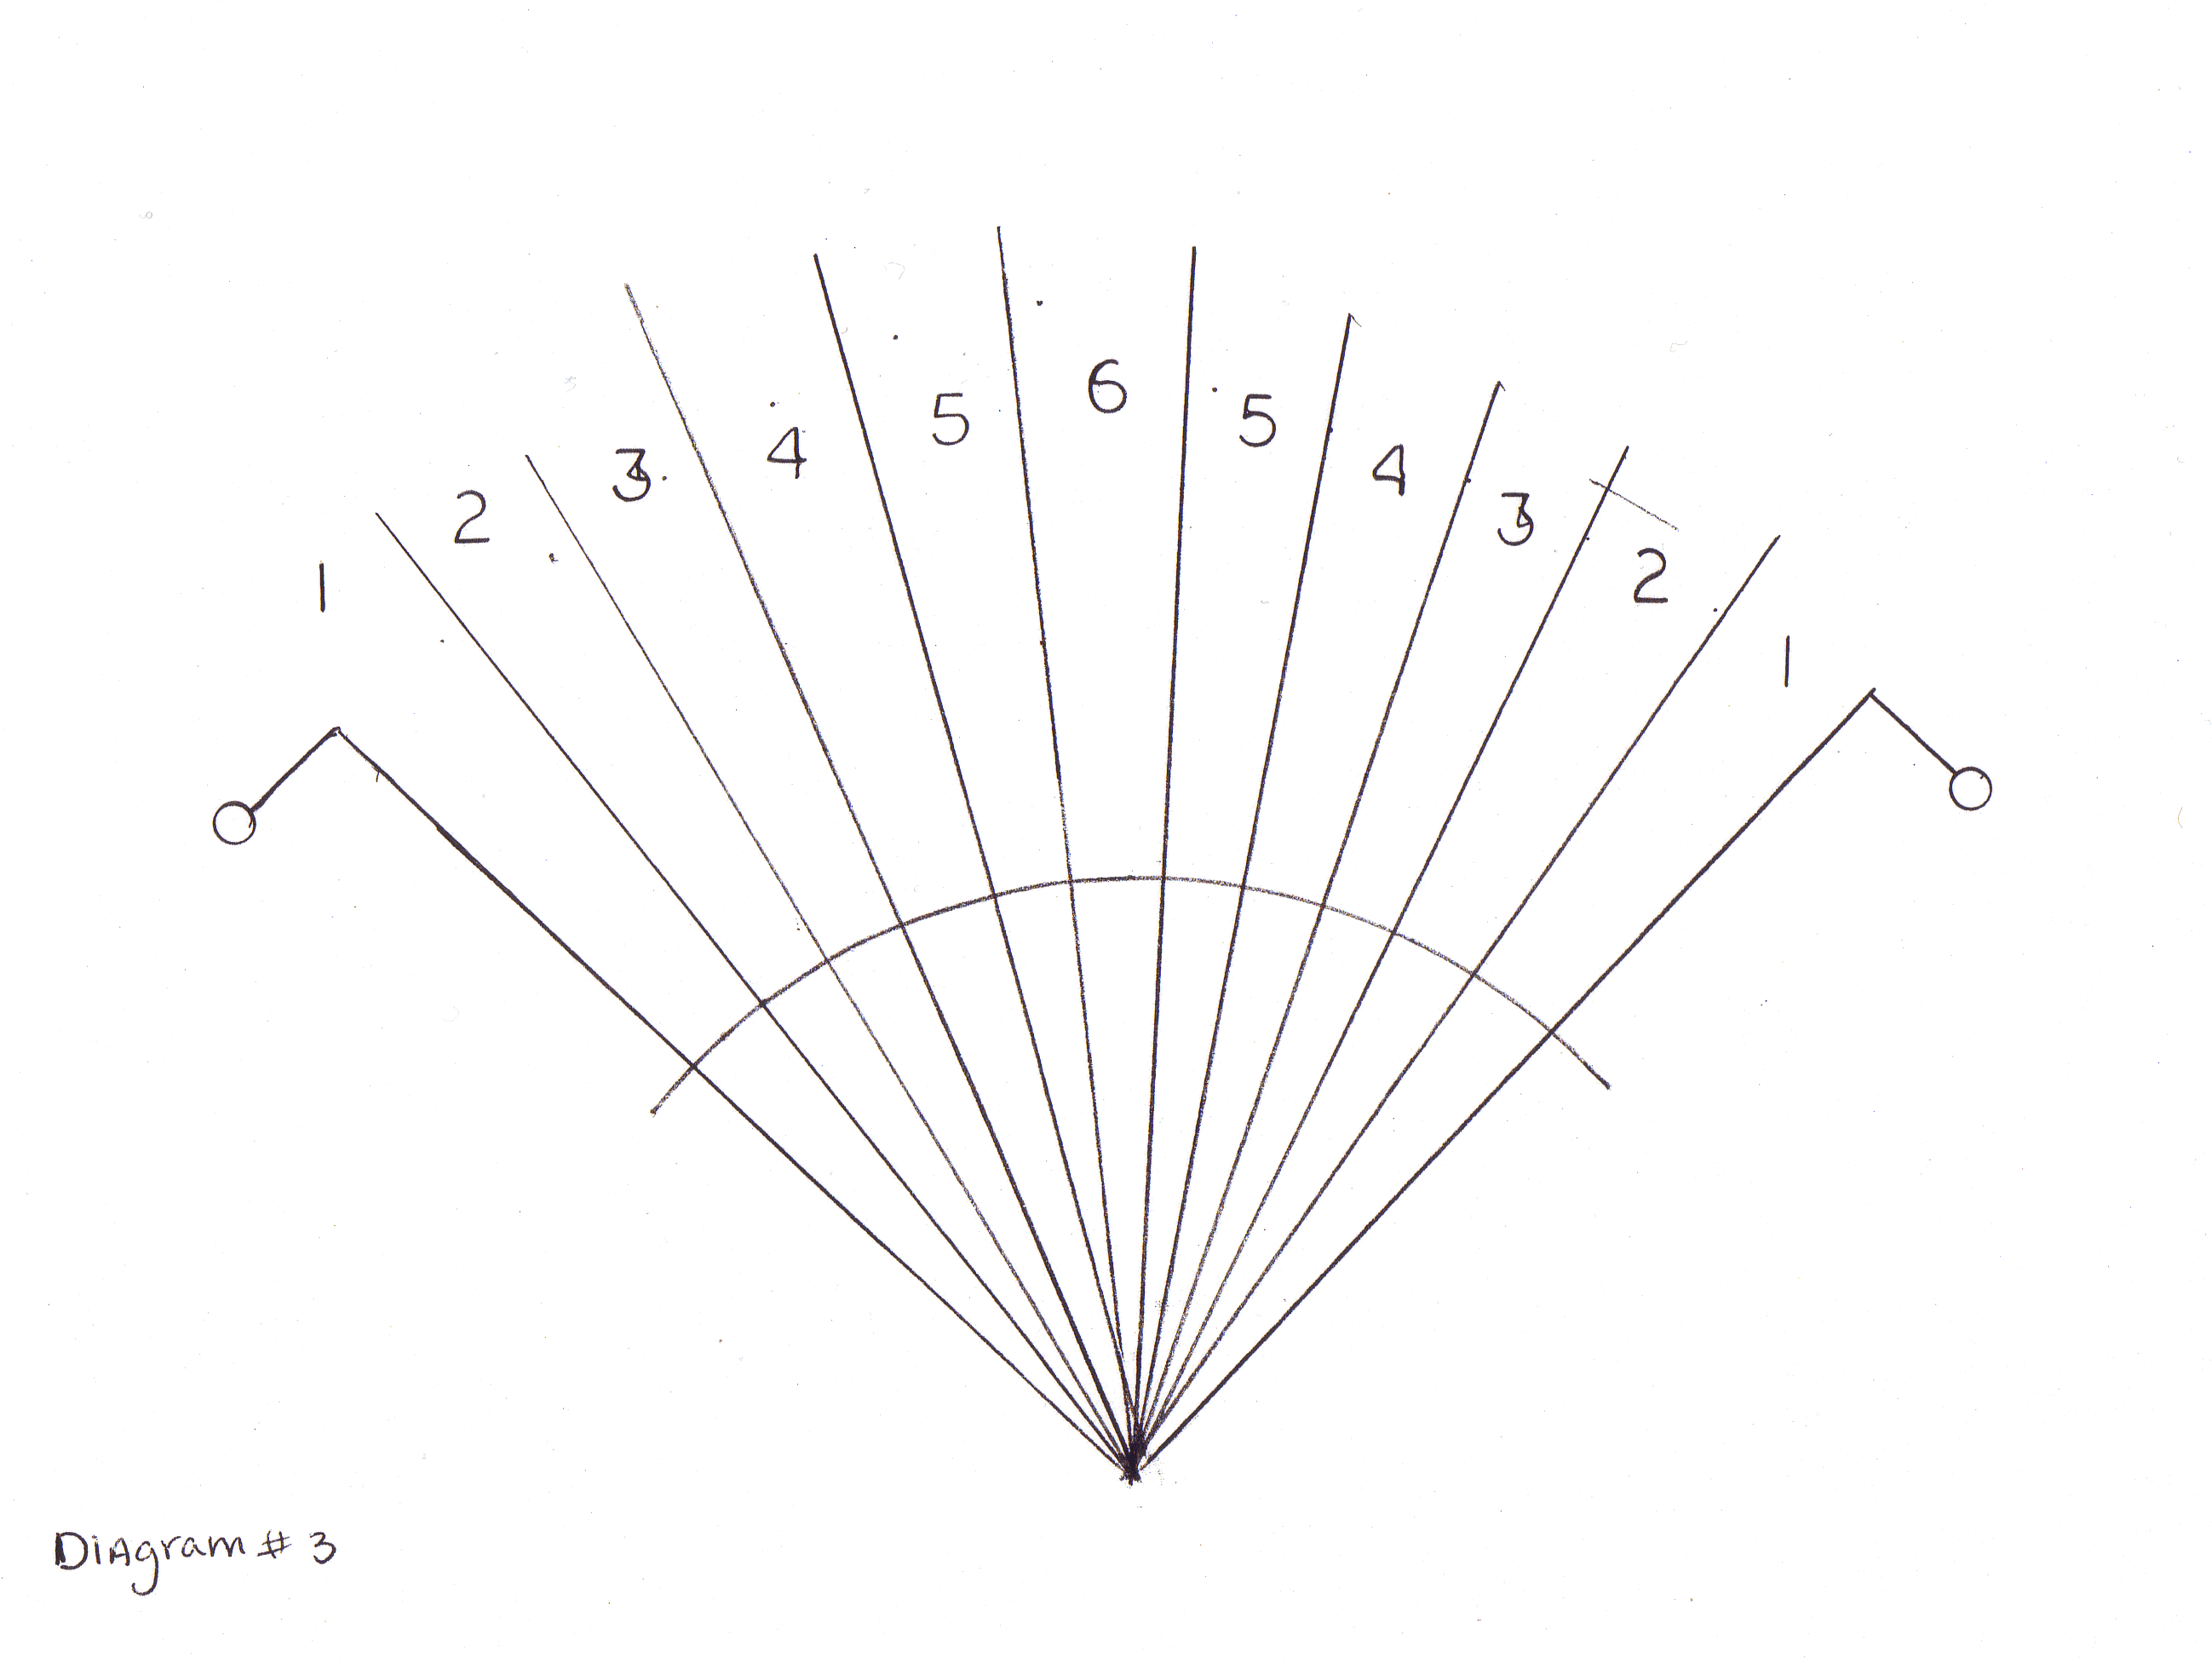 A 2-spottter defense diagram with six zones.